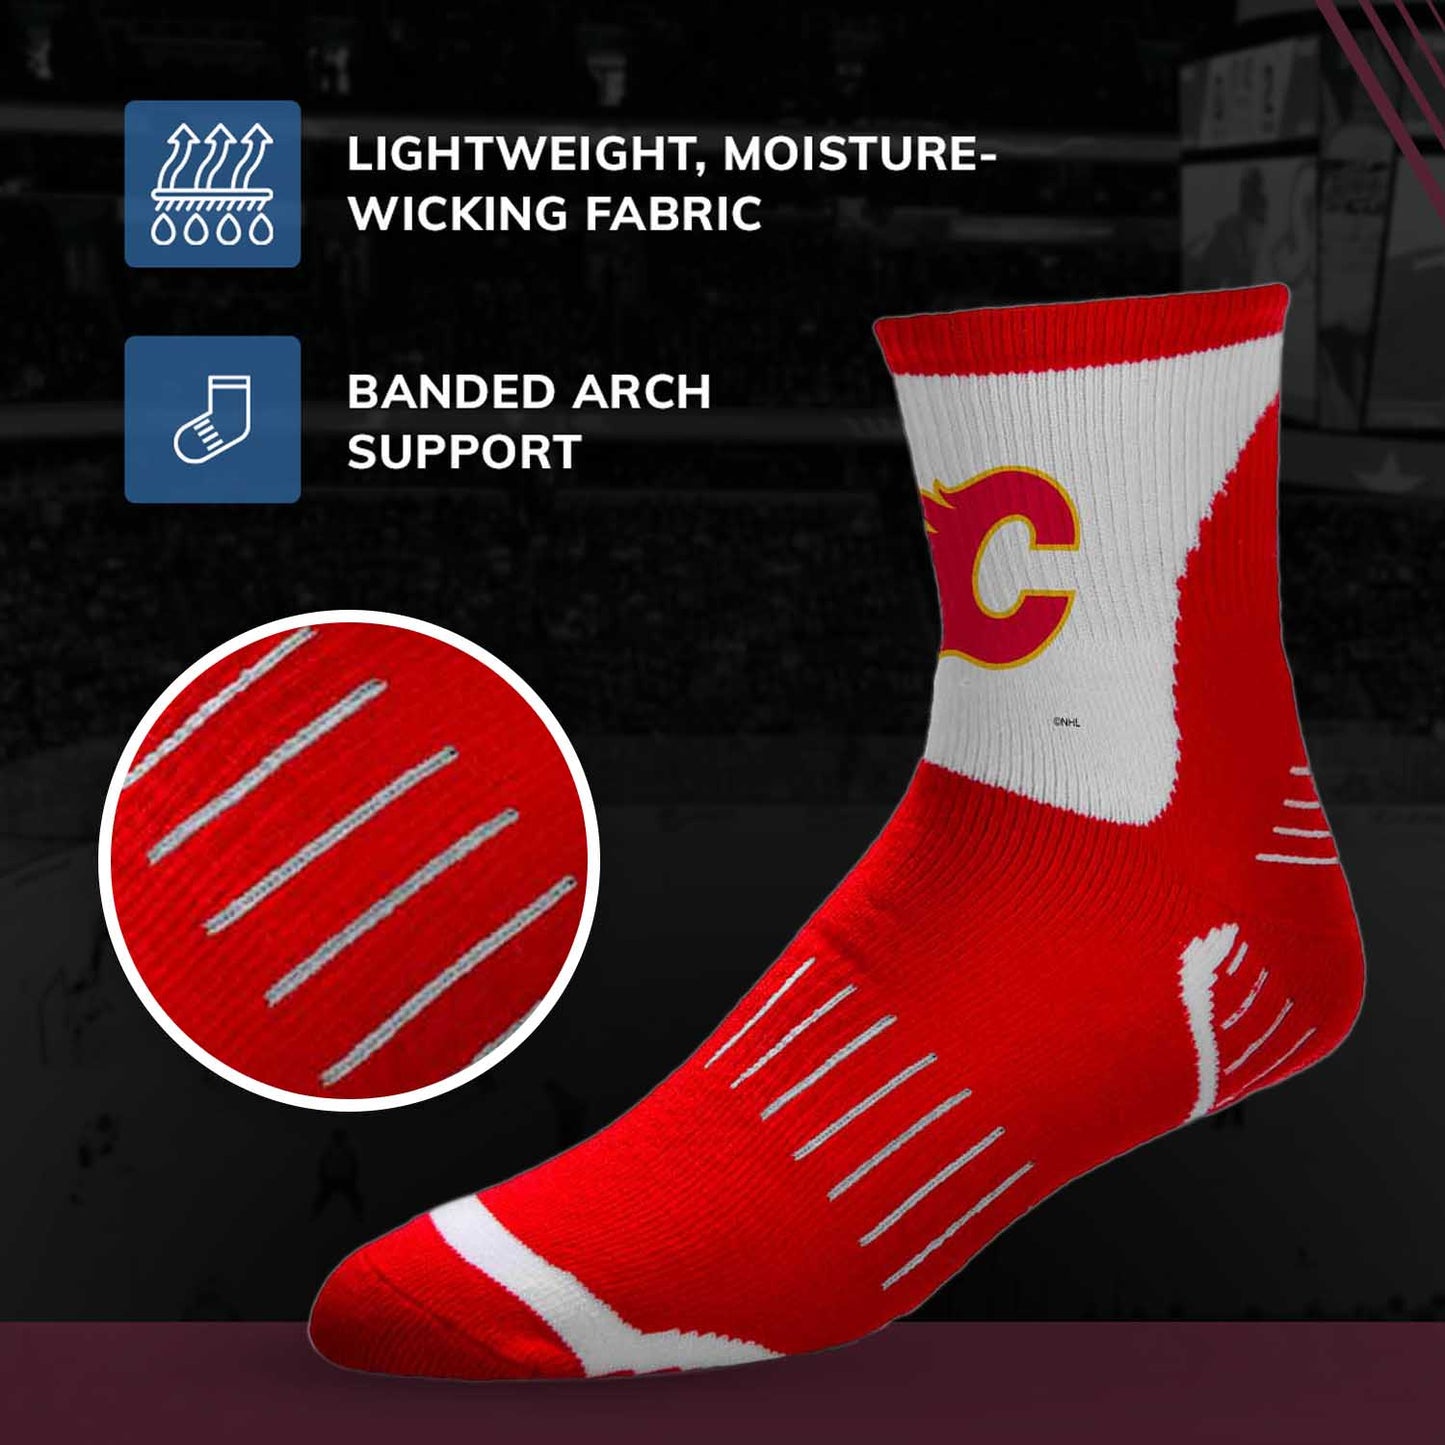 Calgary Flames NHL Adult Surge Team Mascot Mens and Womens Quarter Socks - Red